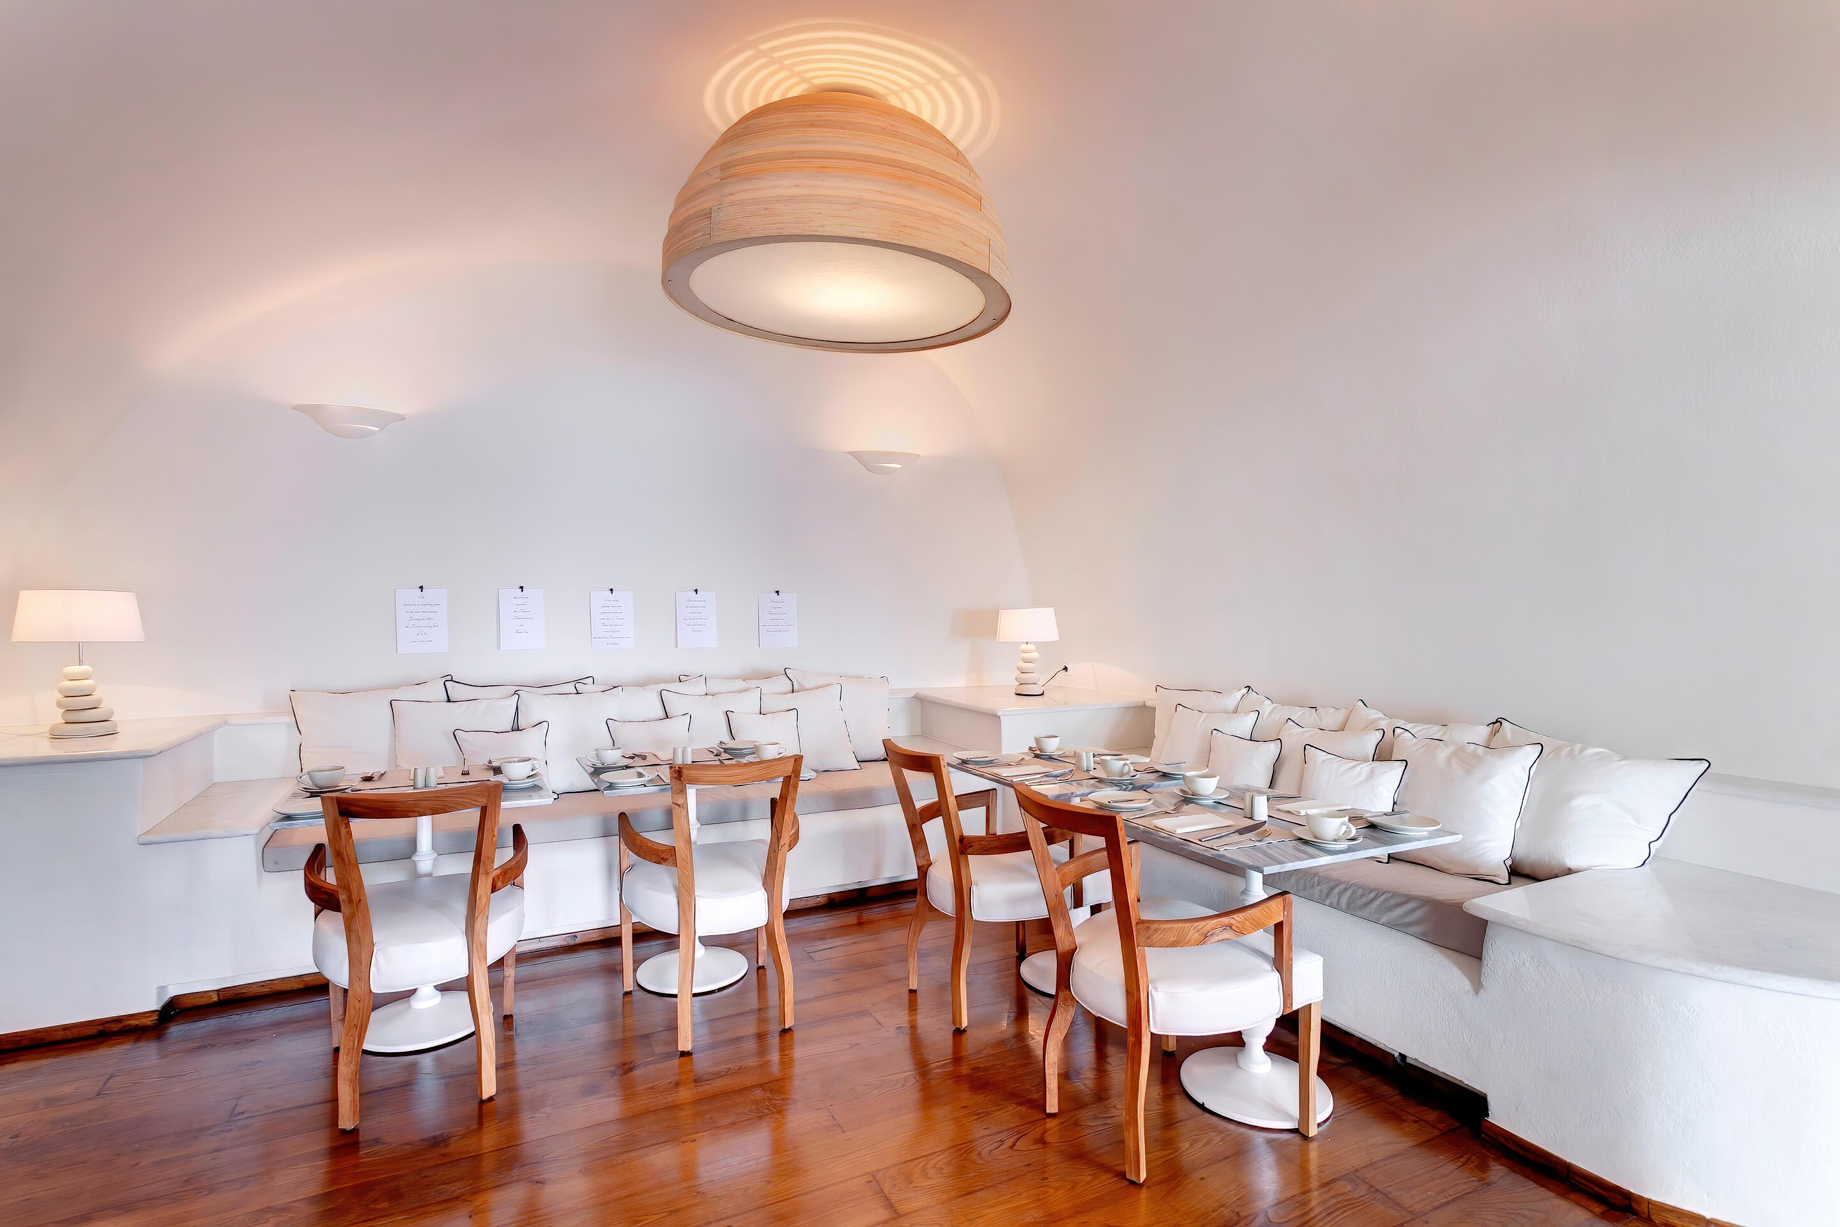 Mystique Hotel Santorini – Oia, Santorini Island, Greece – Captain’s Lounge Tables